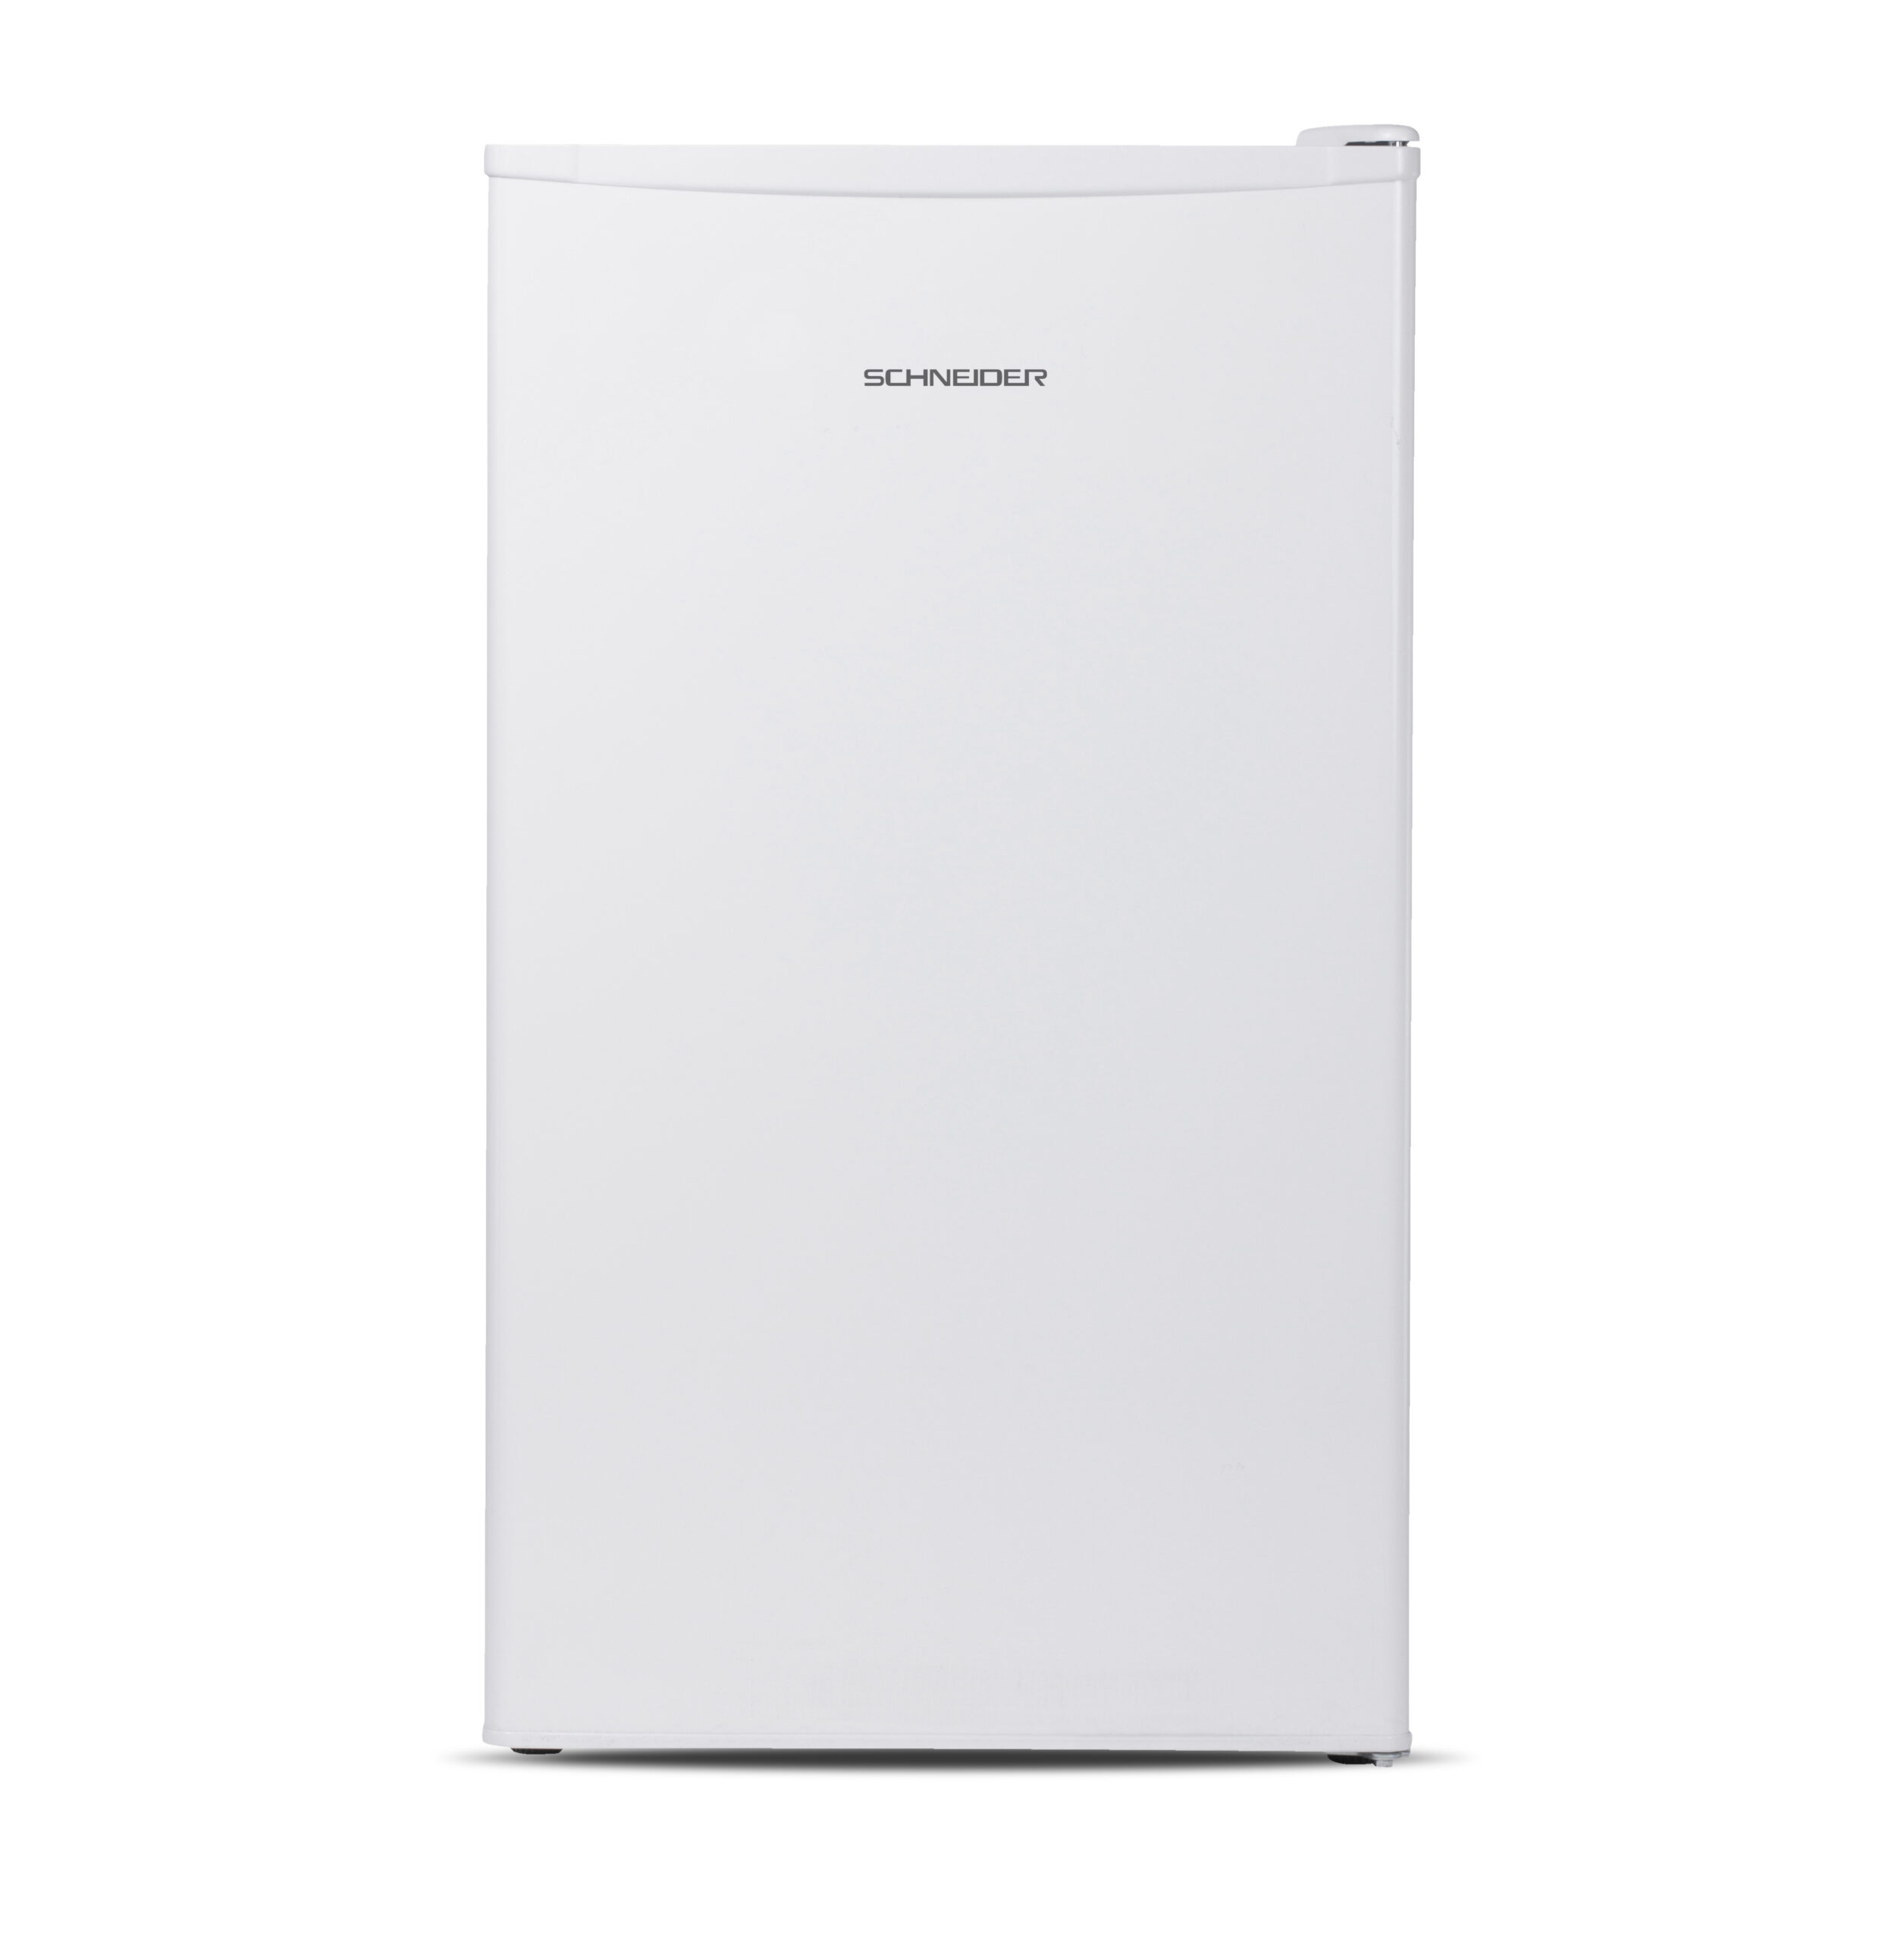 Réfrigérateur table top blanc 112L - SCTT88W - Schneider